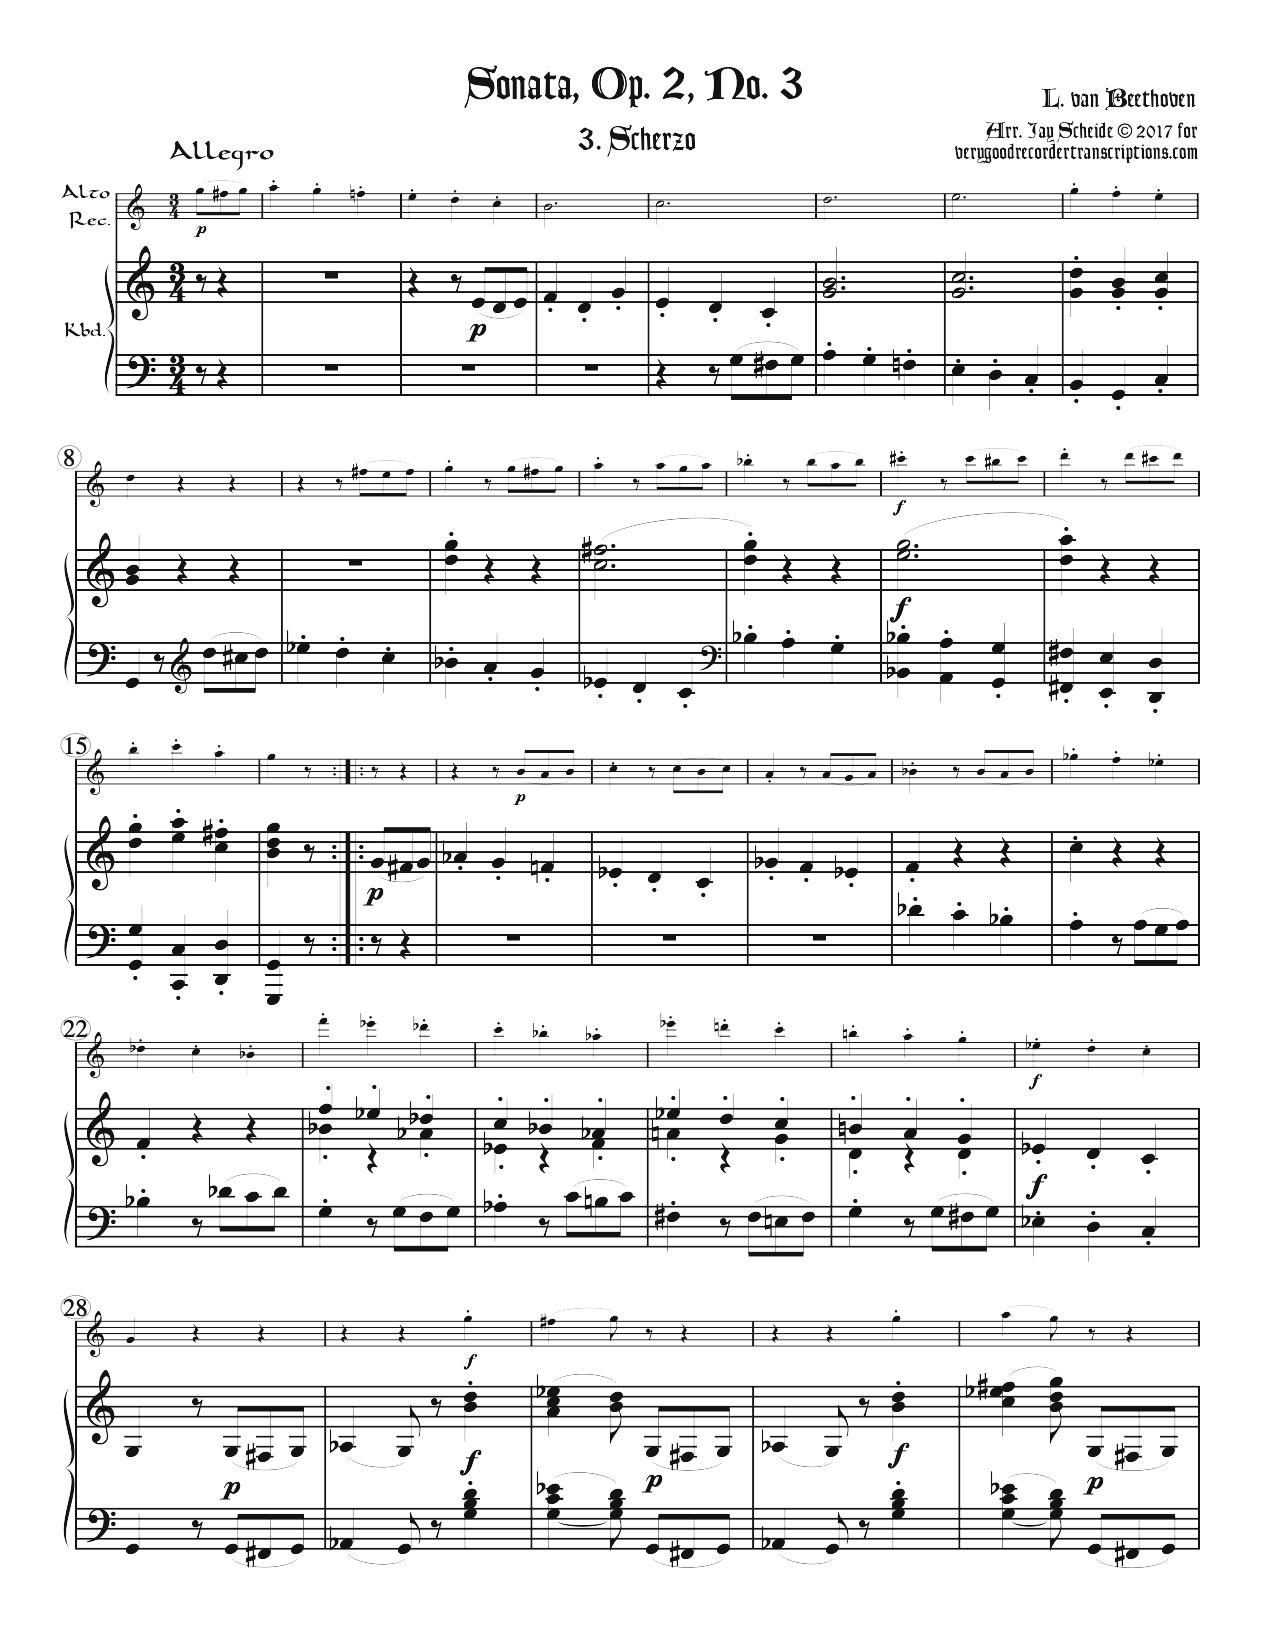 Scherzo from Sonata, Op. 2, No. 3